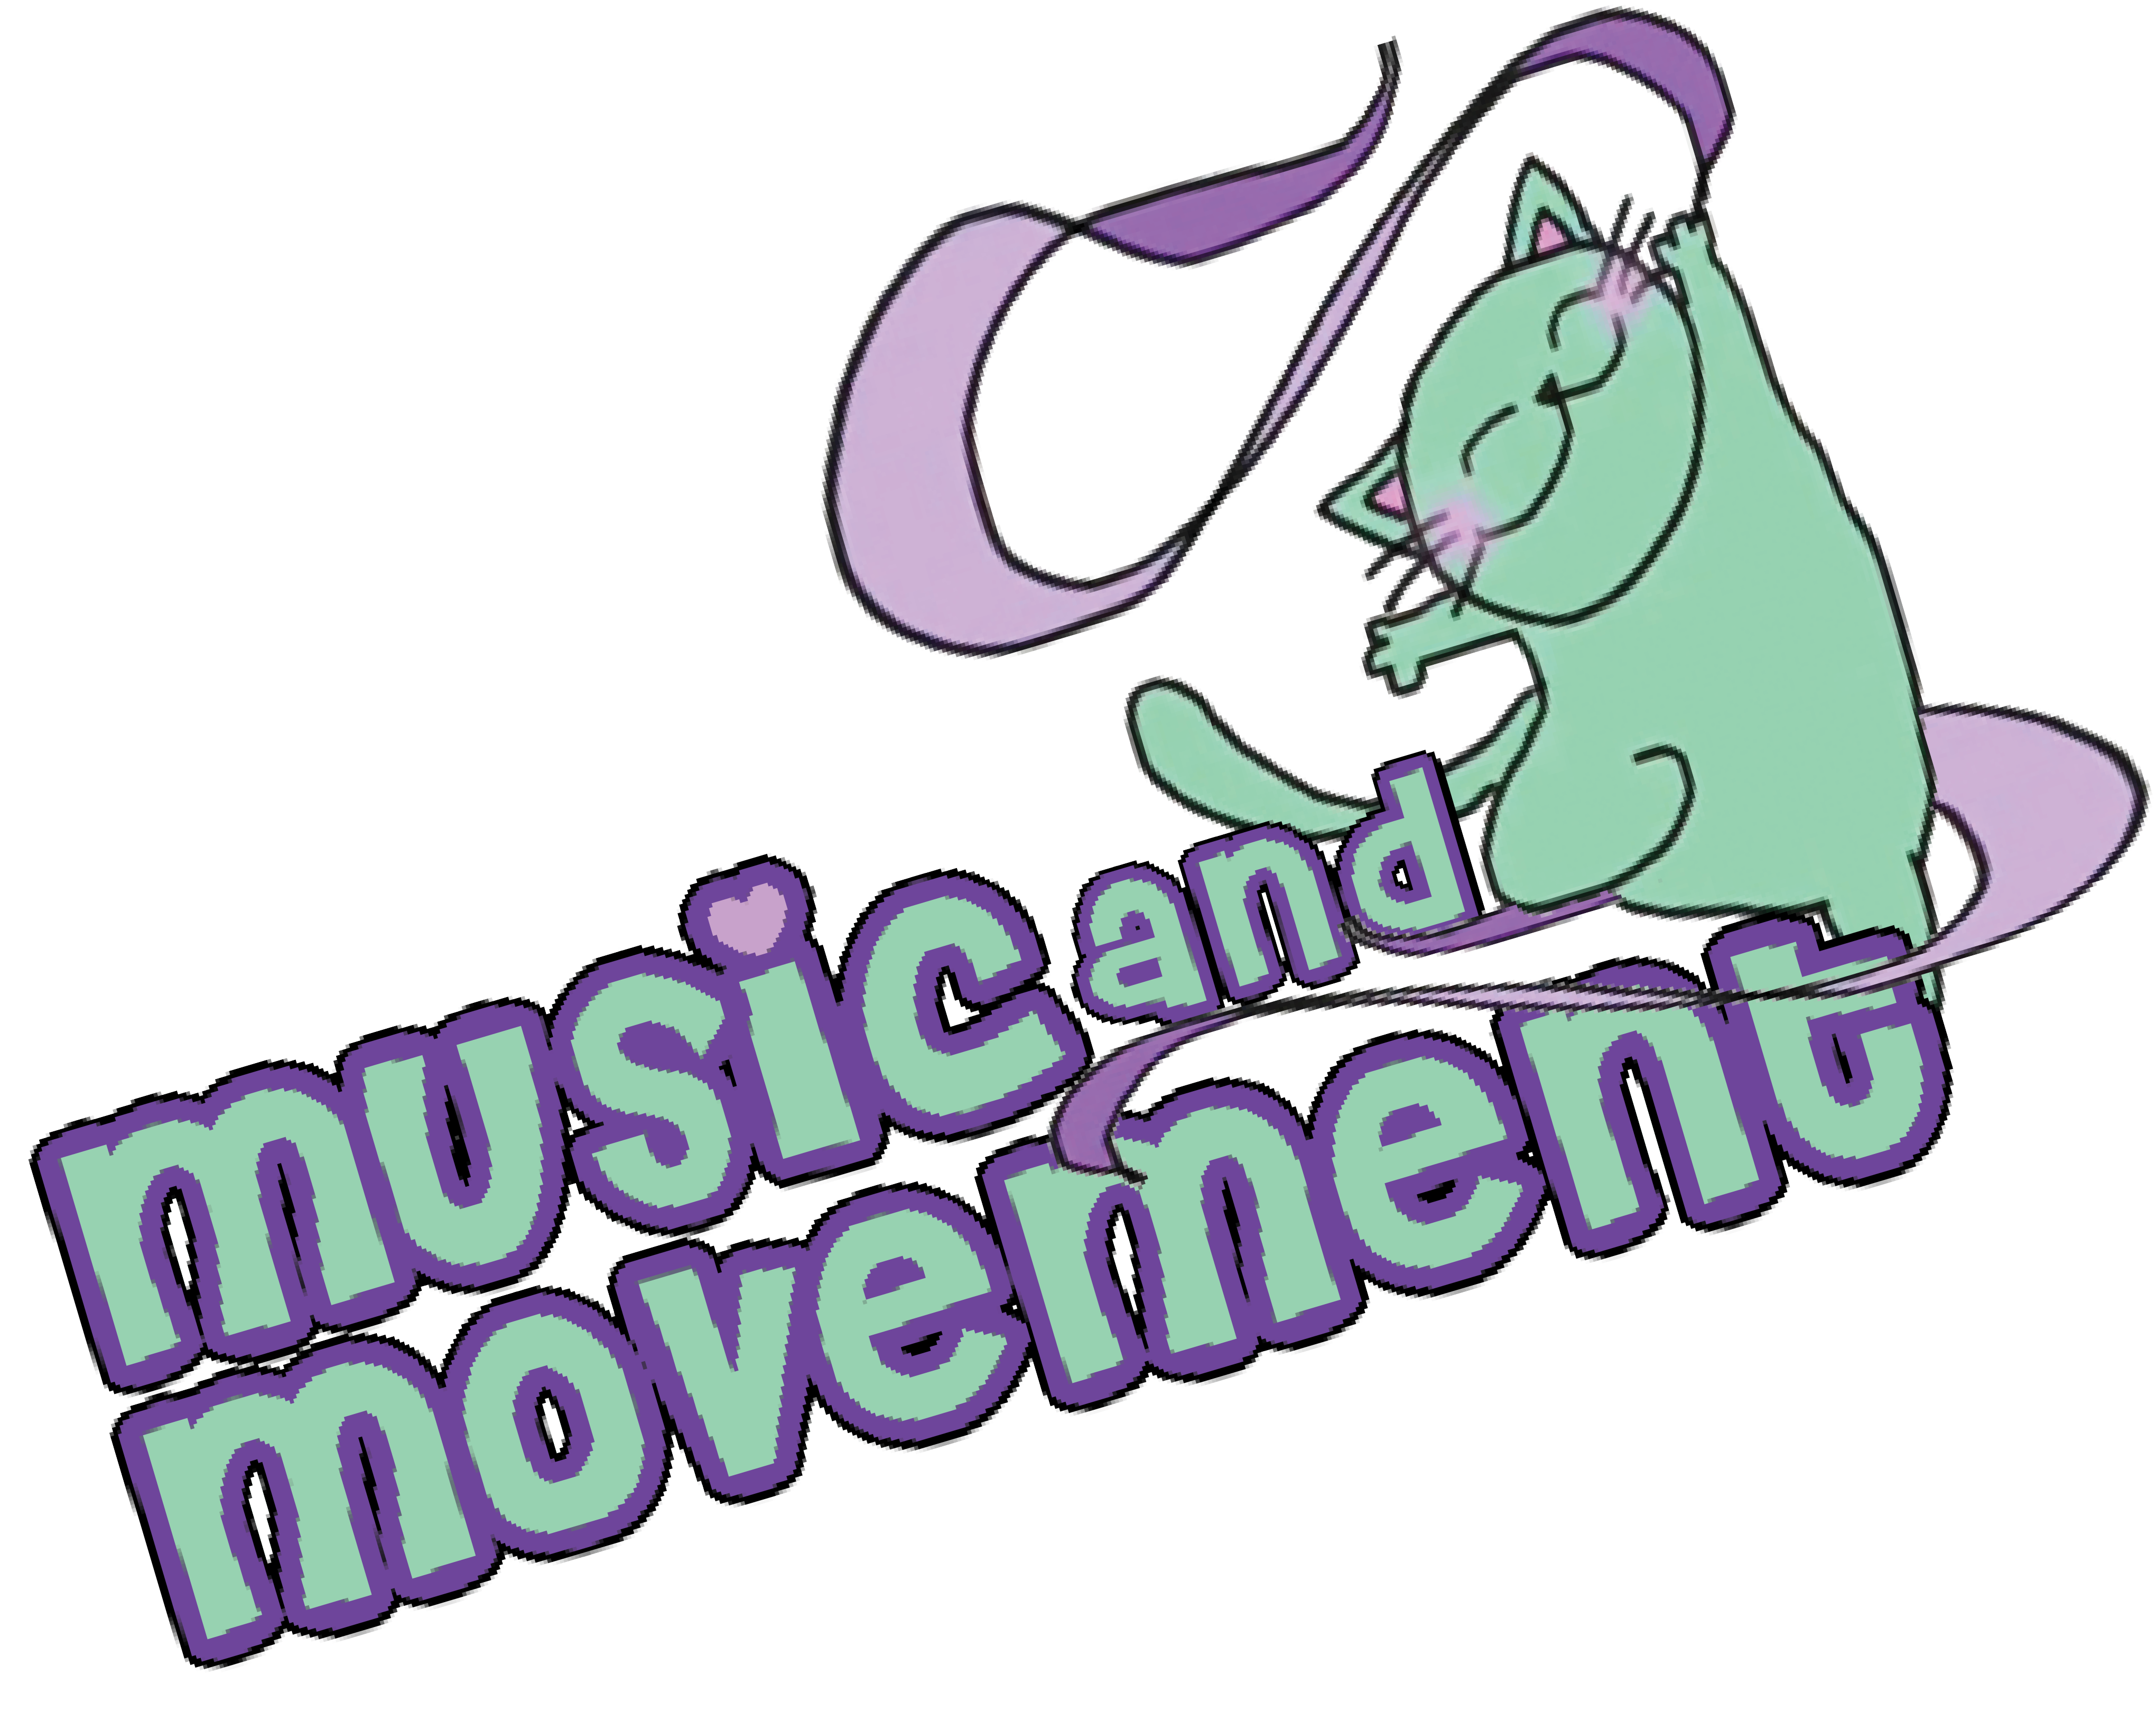 Music and Movement logo